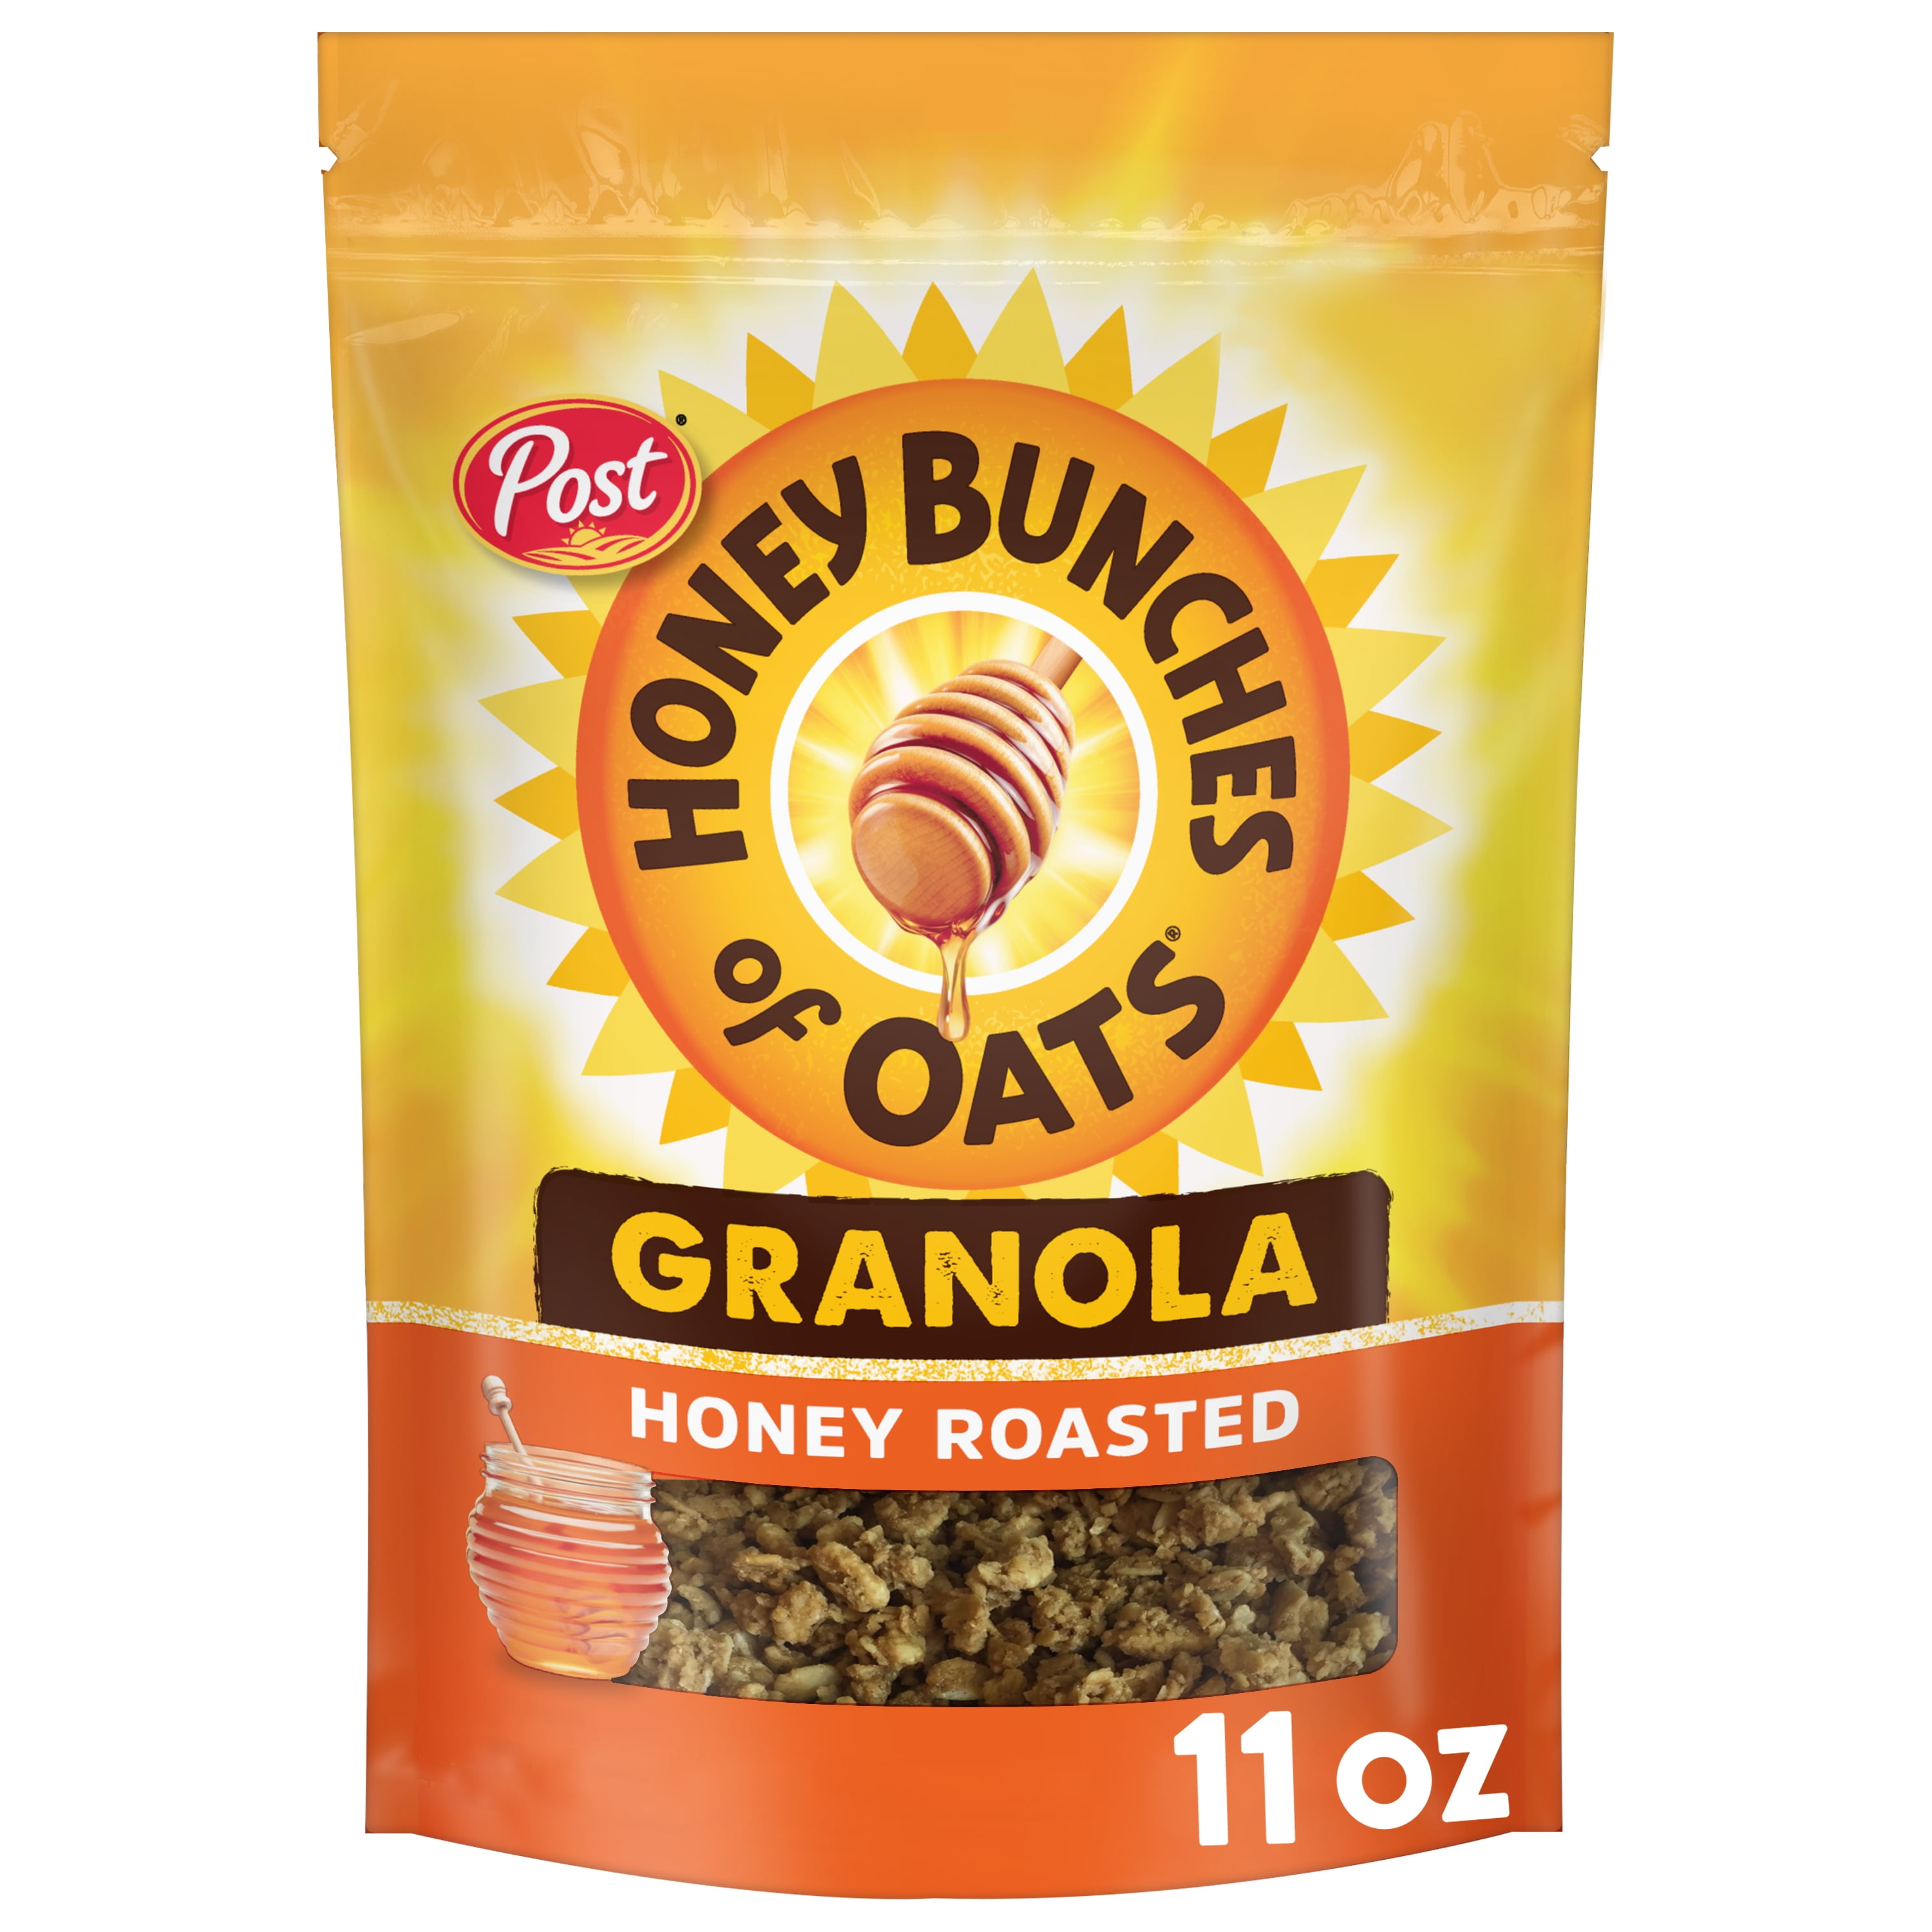 Post Honey Bunches of Oats Honey Roasted Granola Cereal, Honey Granola, 11 OZ Granola Bag